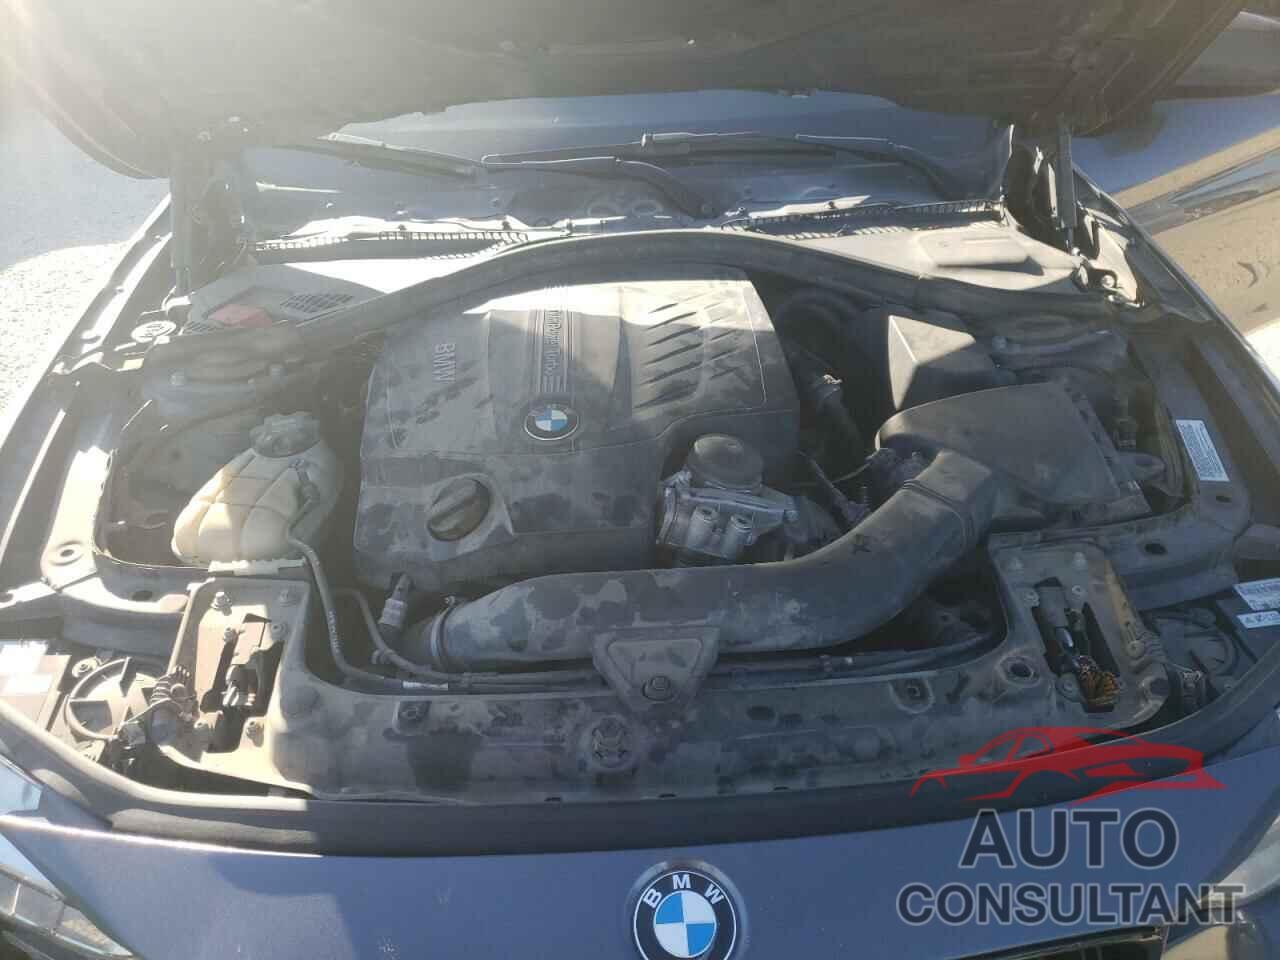 BMW 4 SERIES 2015 - WBA4B1C52FD955079